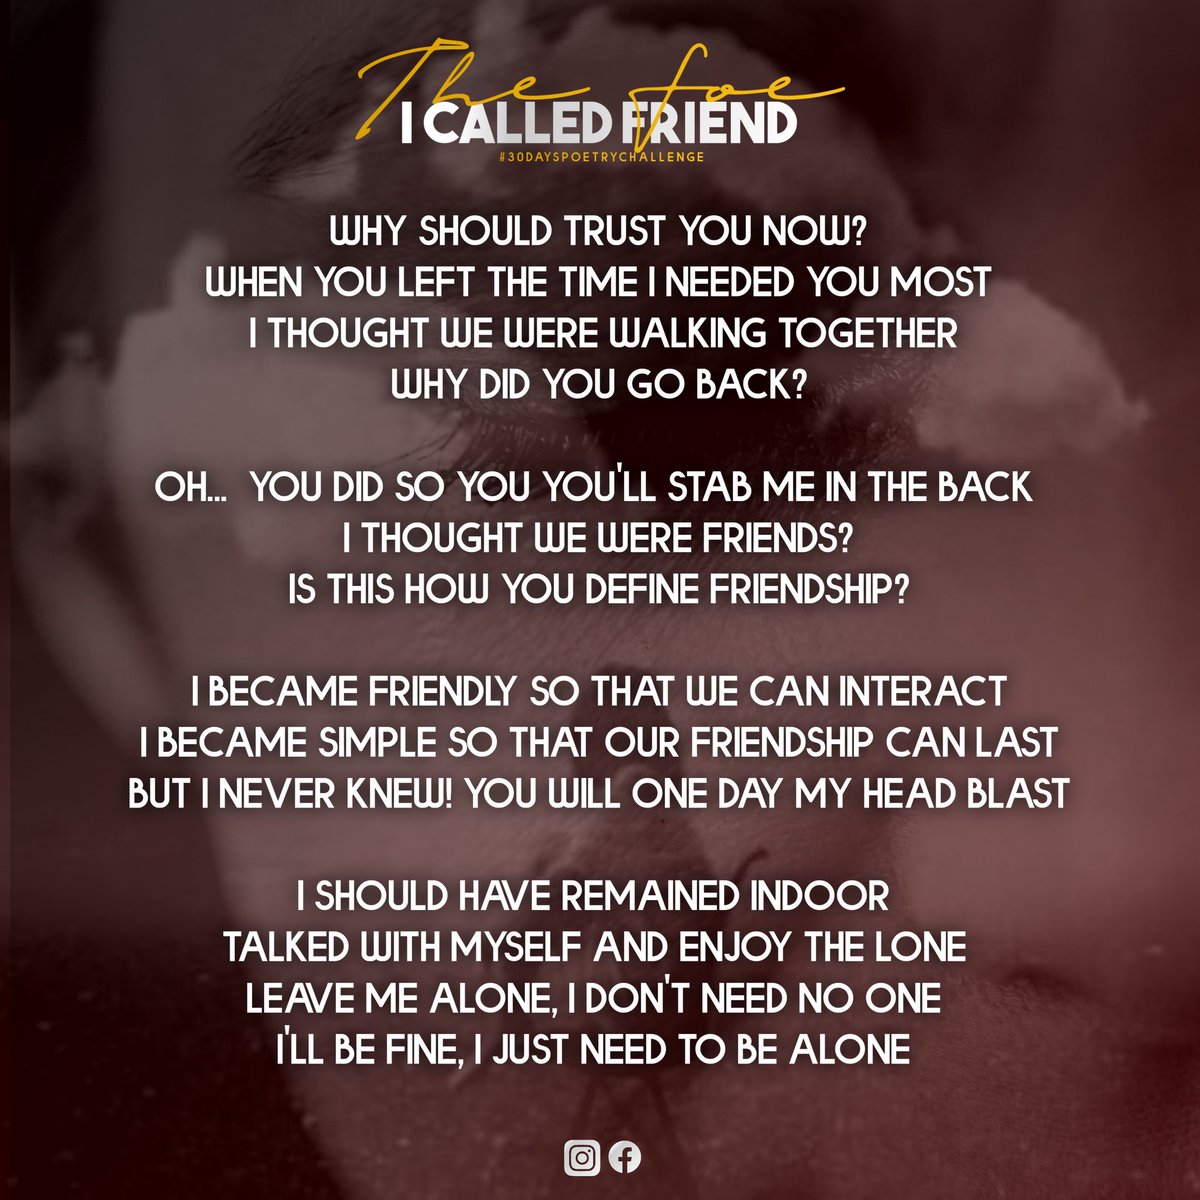 #30DaysPoetryChallenge 
 The Foe I called friend